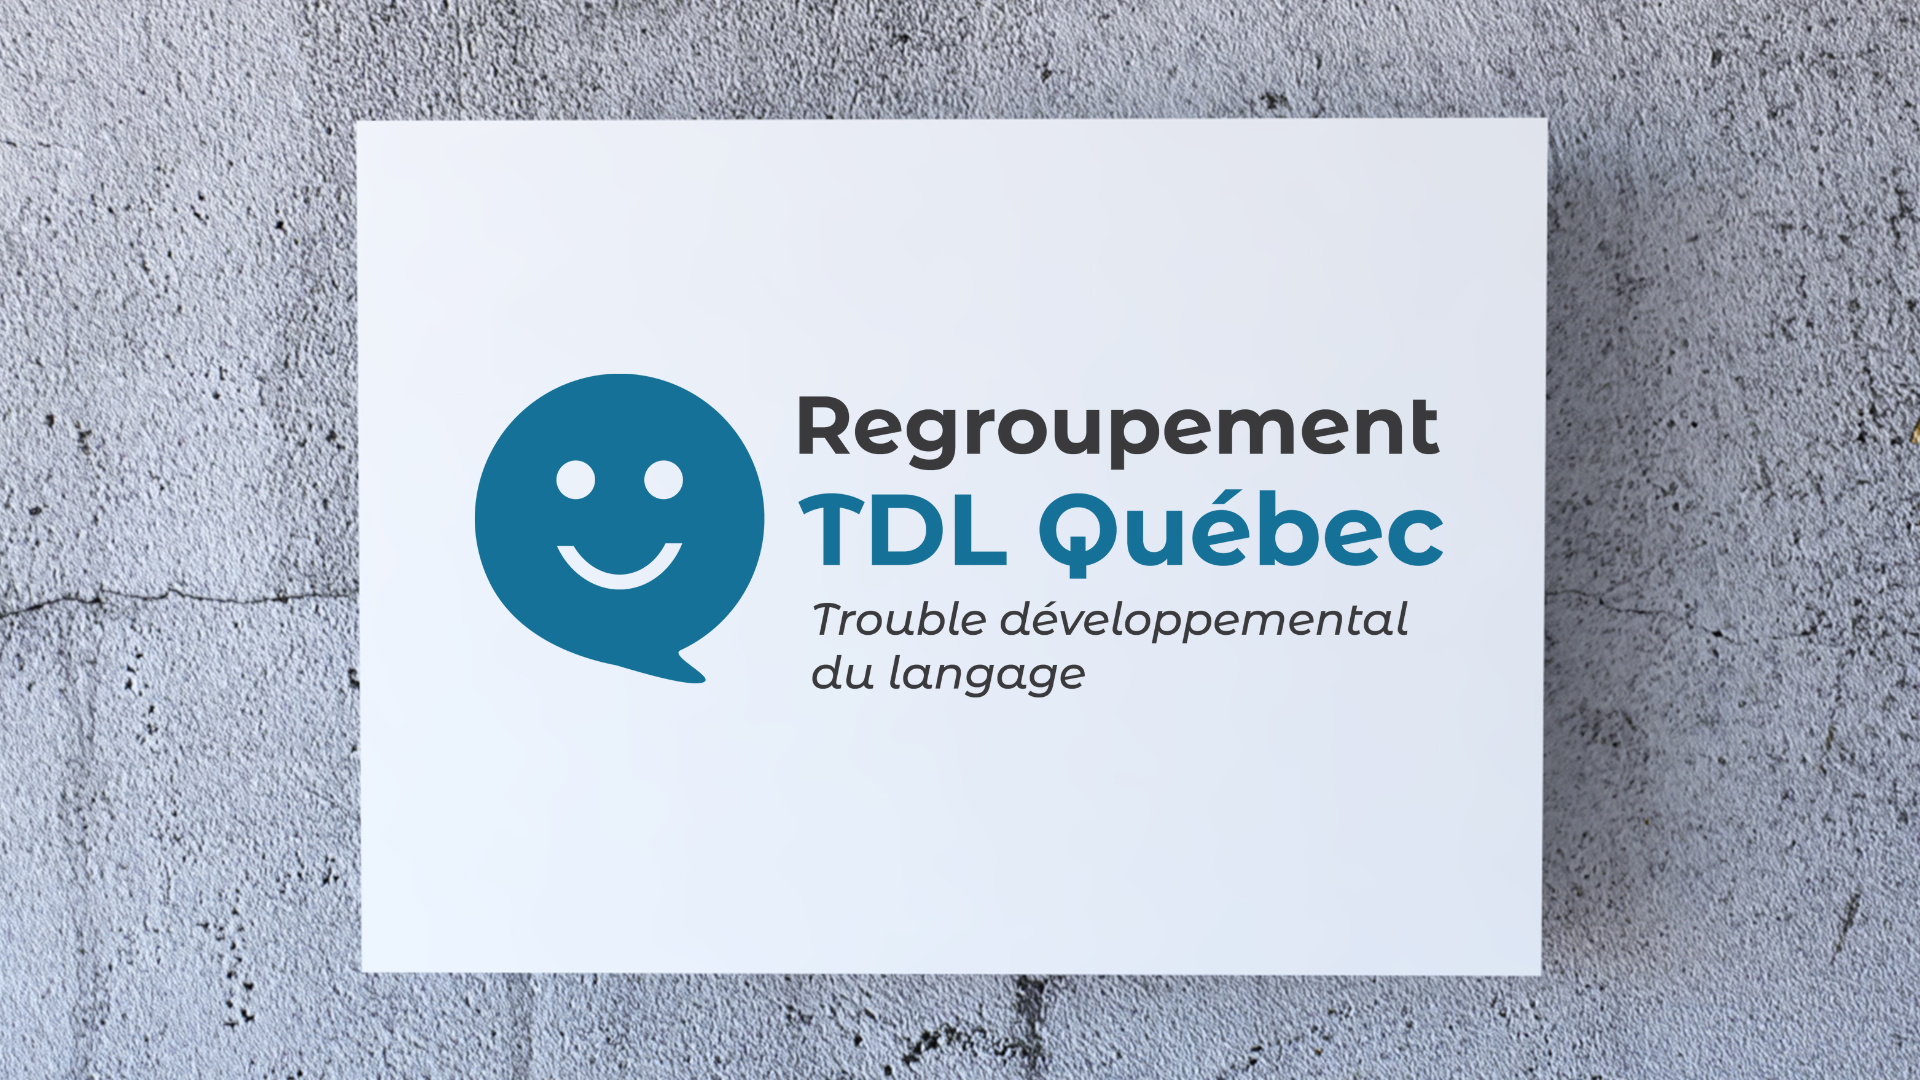 Regroupement TDL Québec